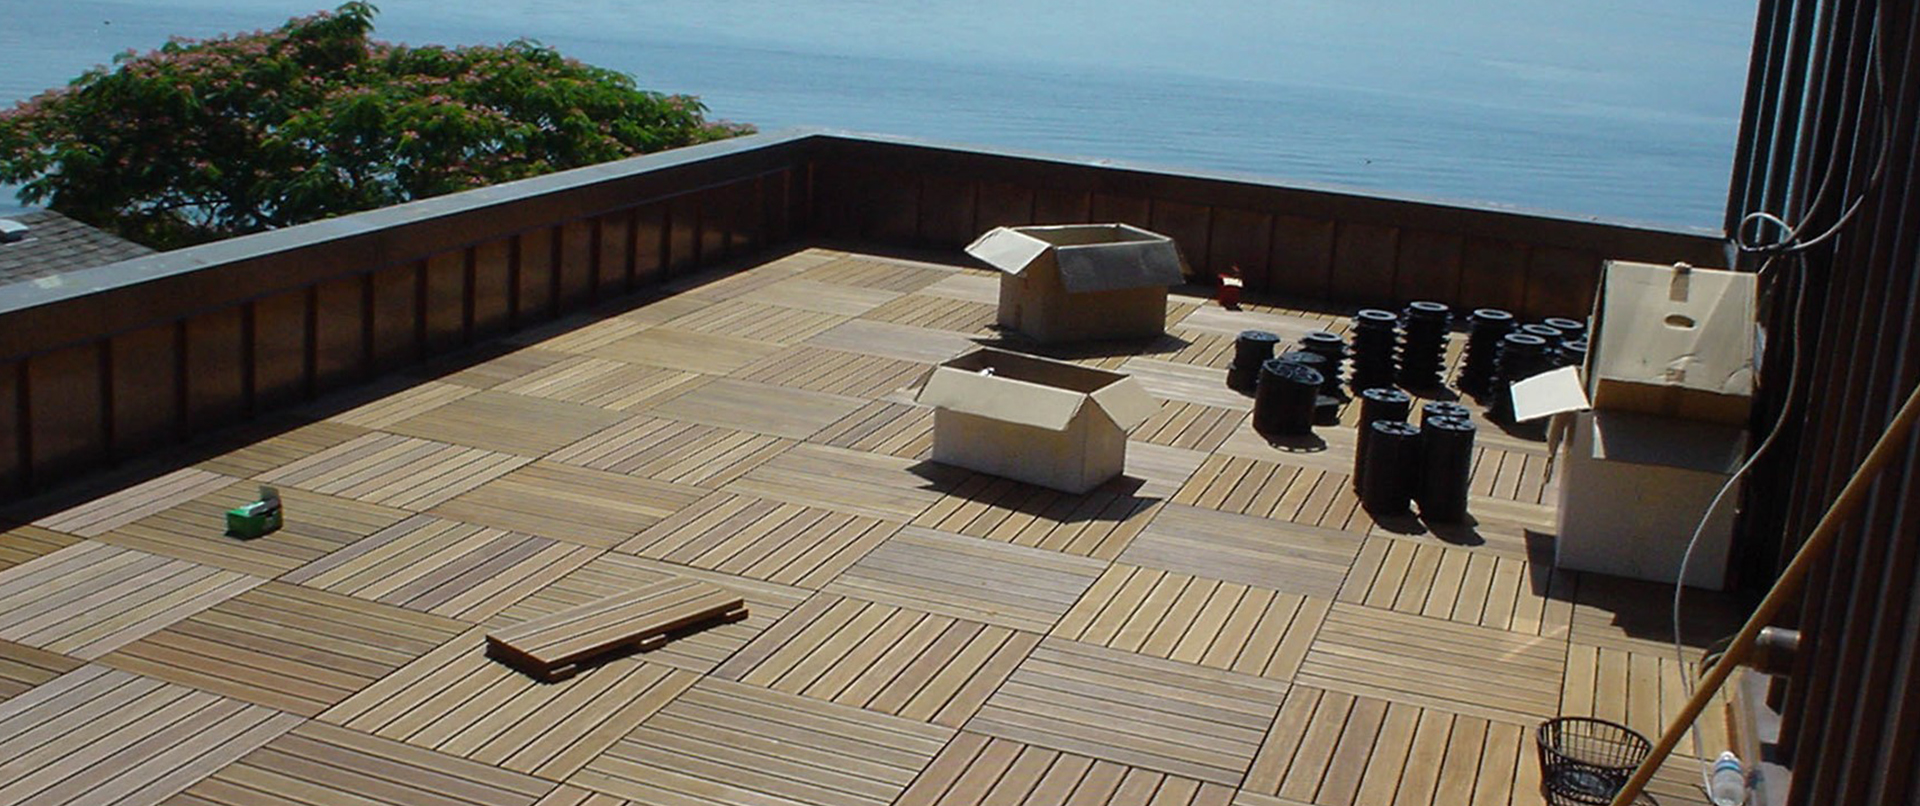 Waterside Wood Tile Rooftop in Progress